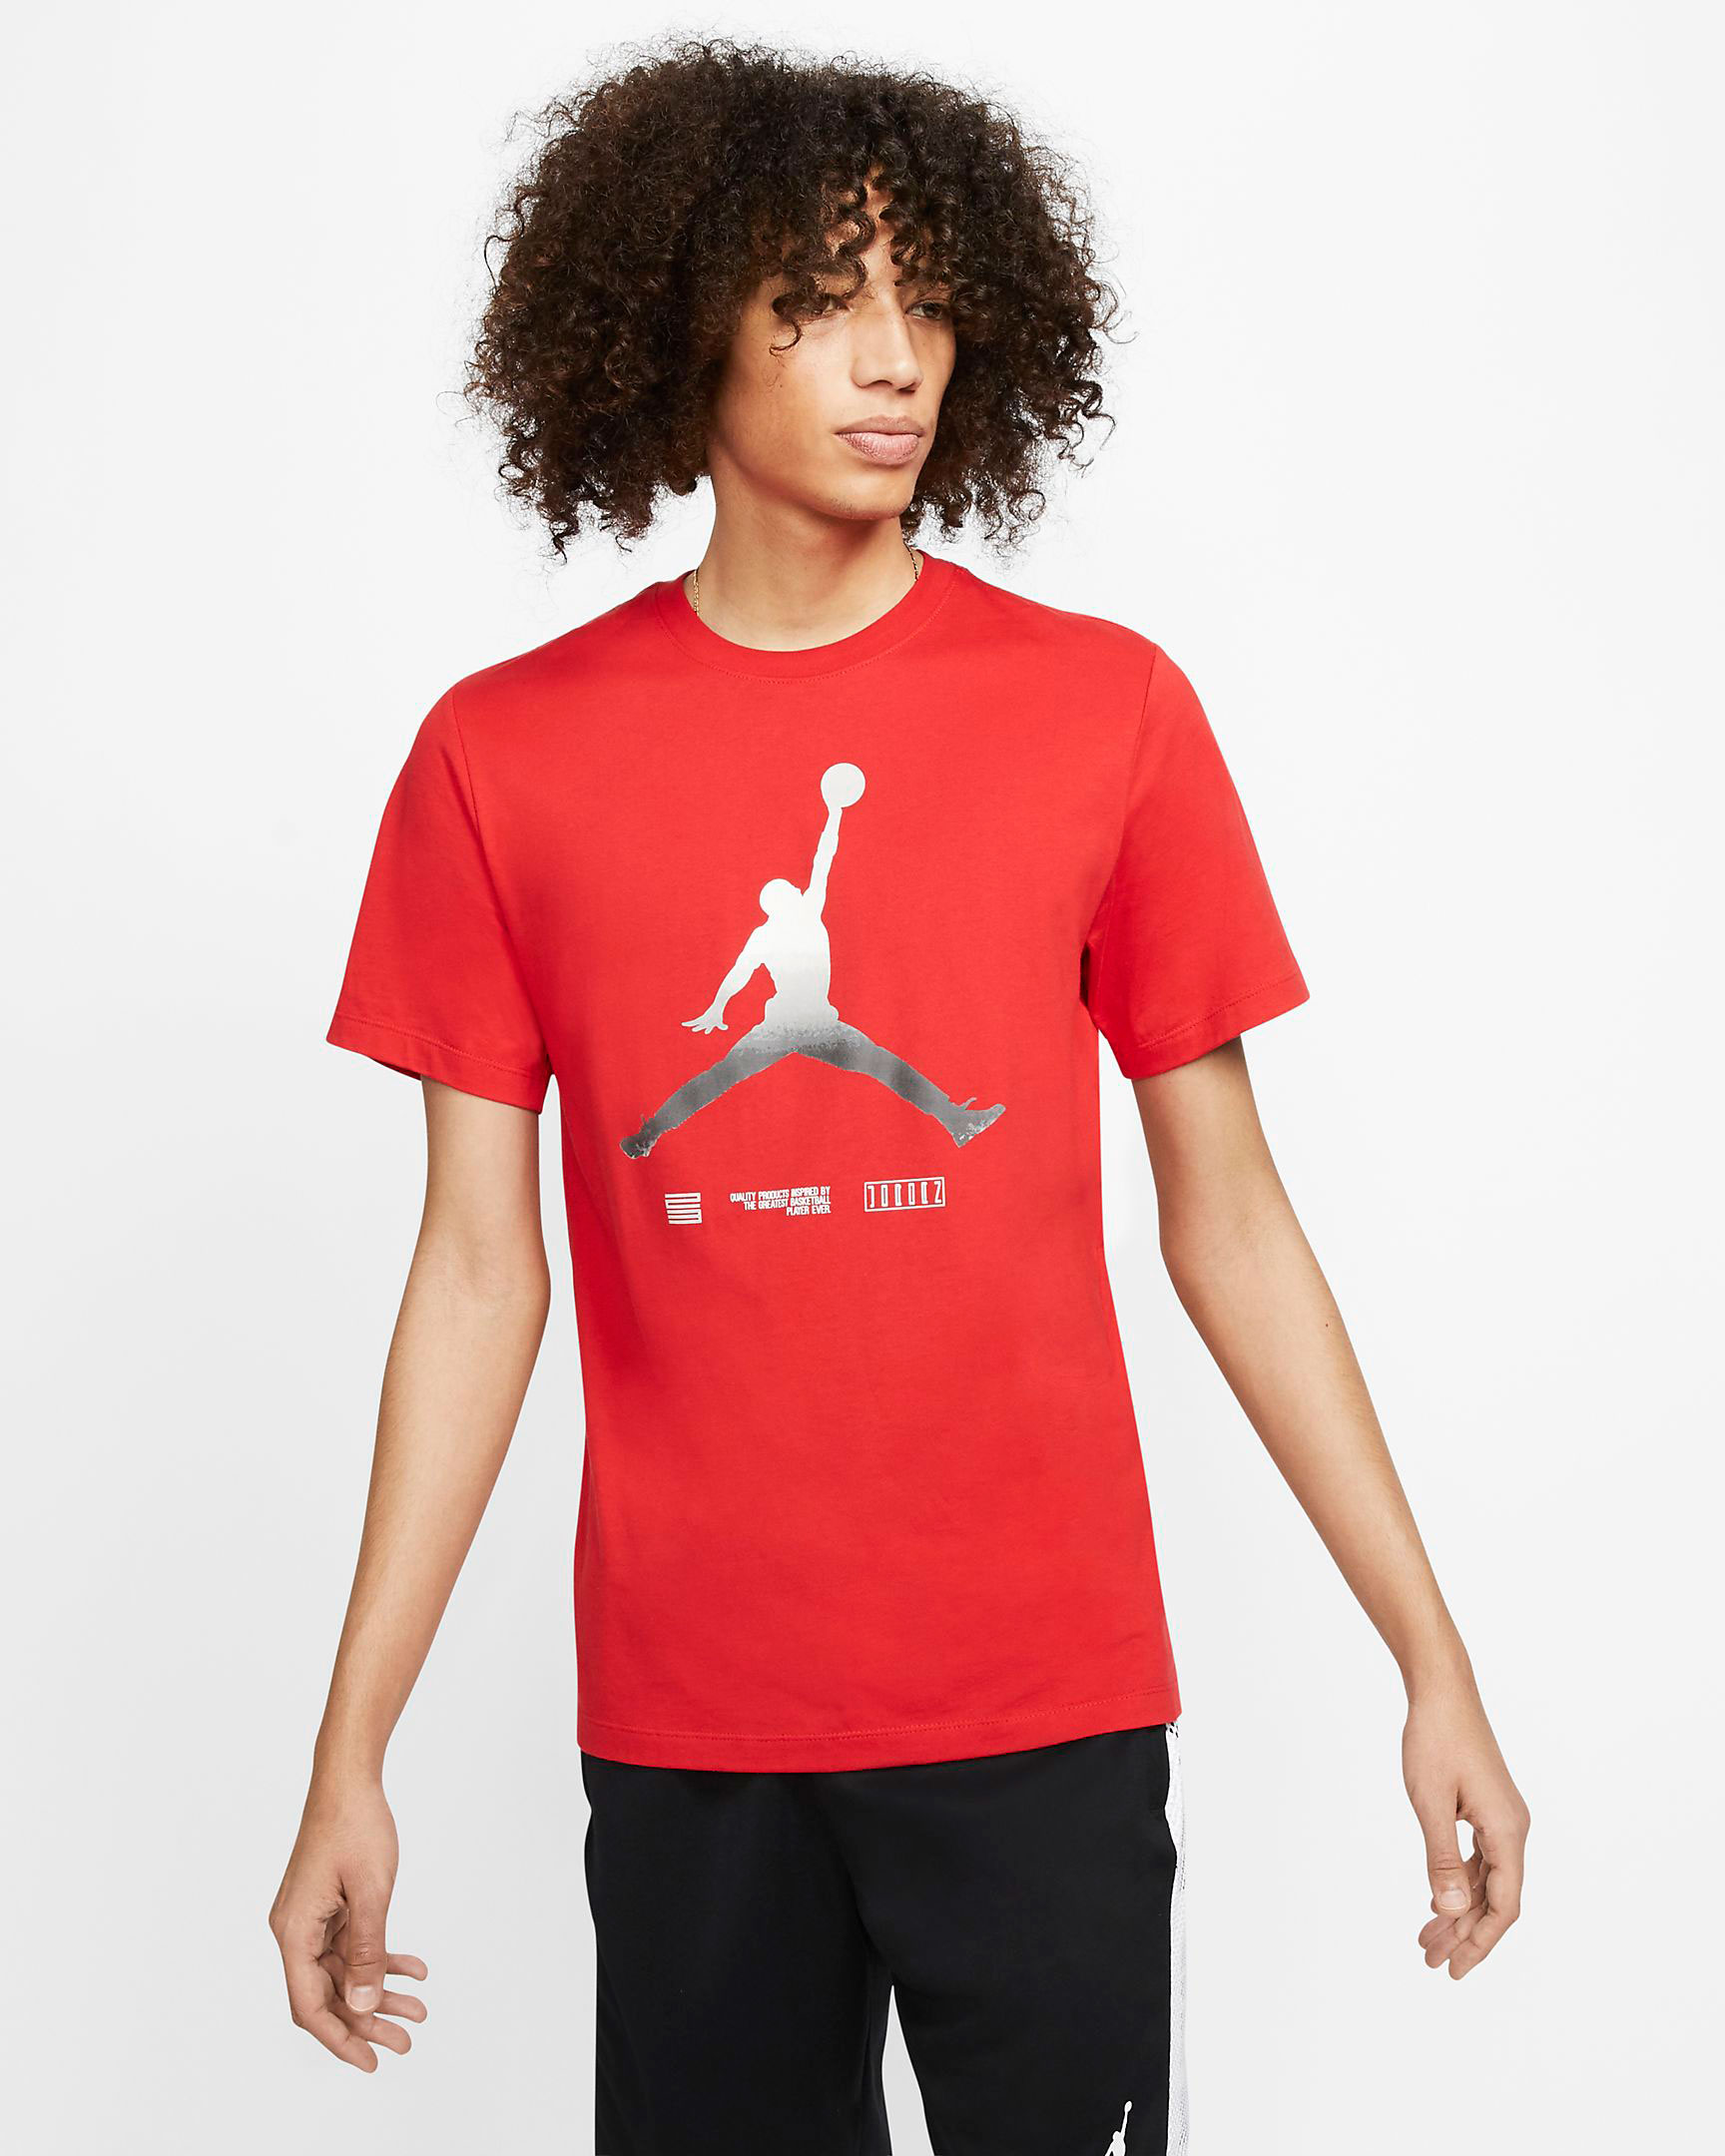 jordan 11 concord bred shirt